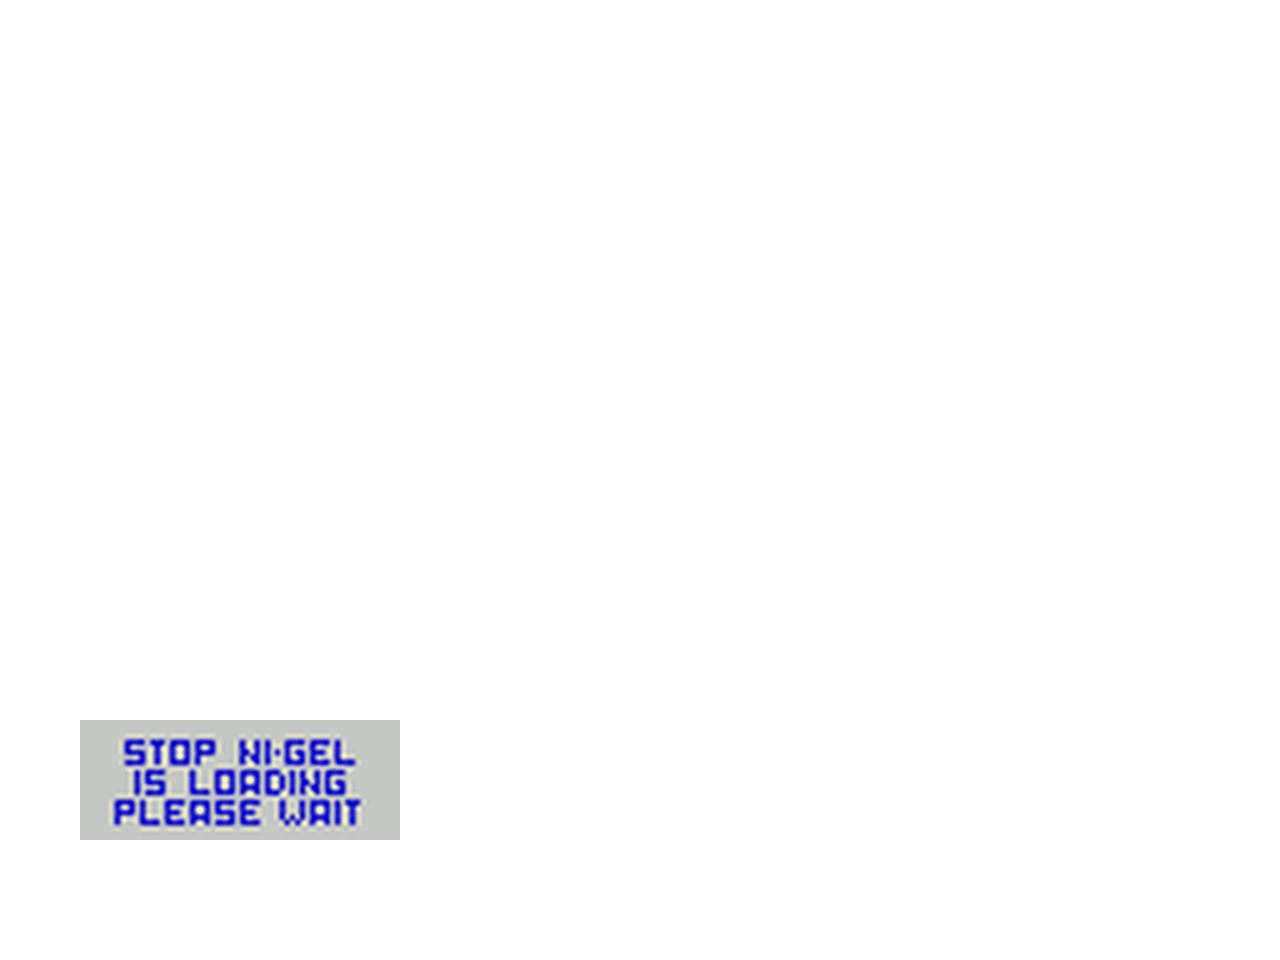 ZX GameBase Stop_Ni-Gel! Welset_Software 1986